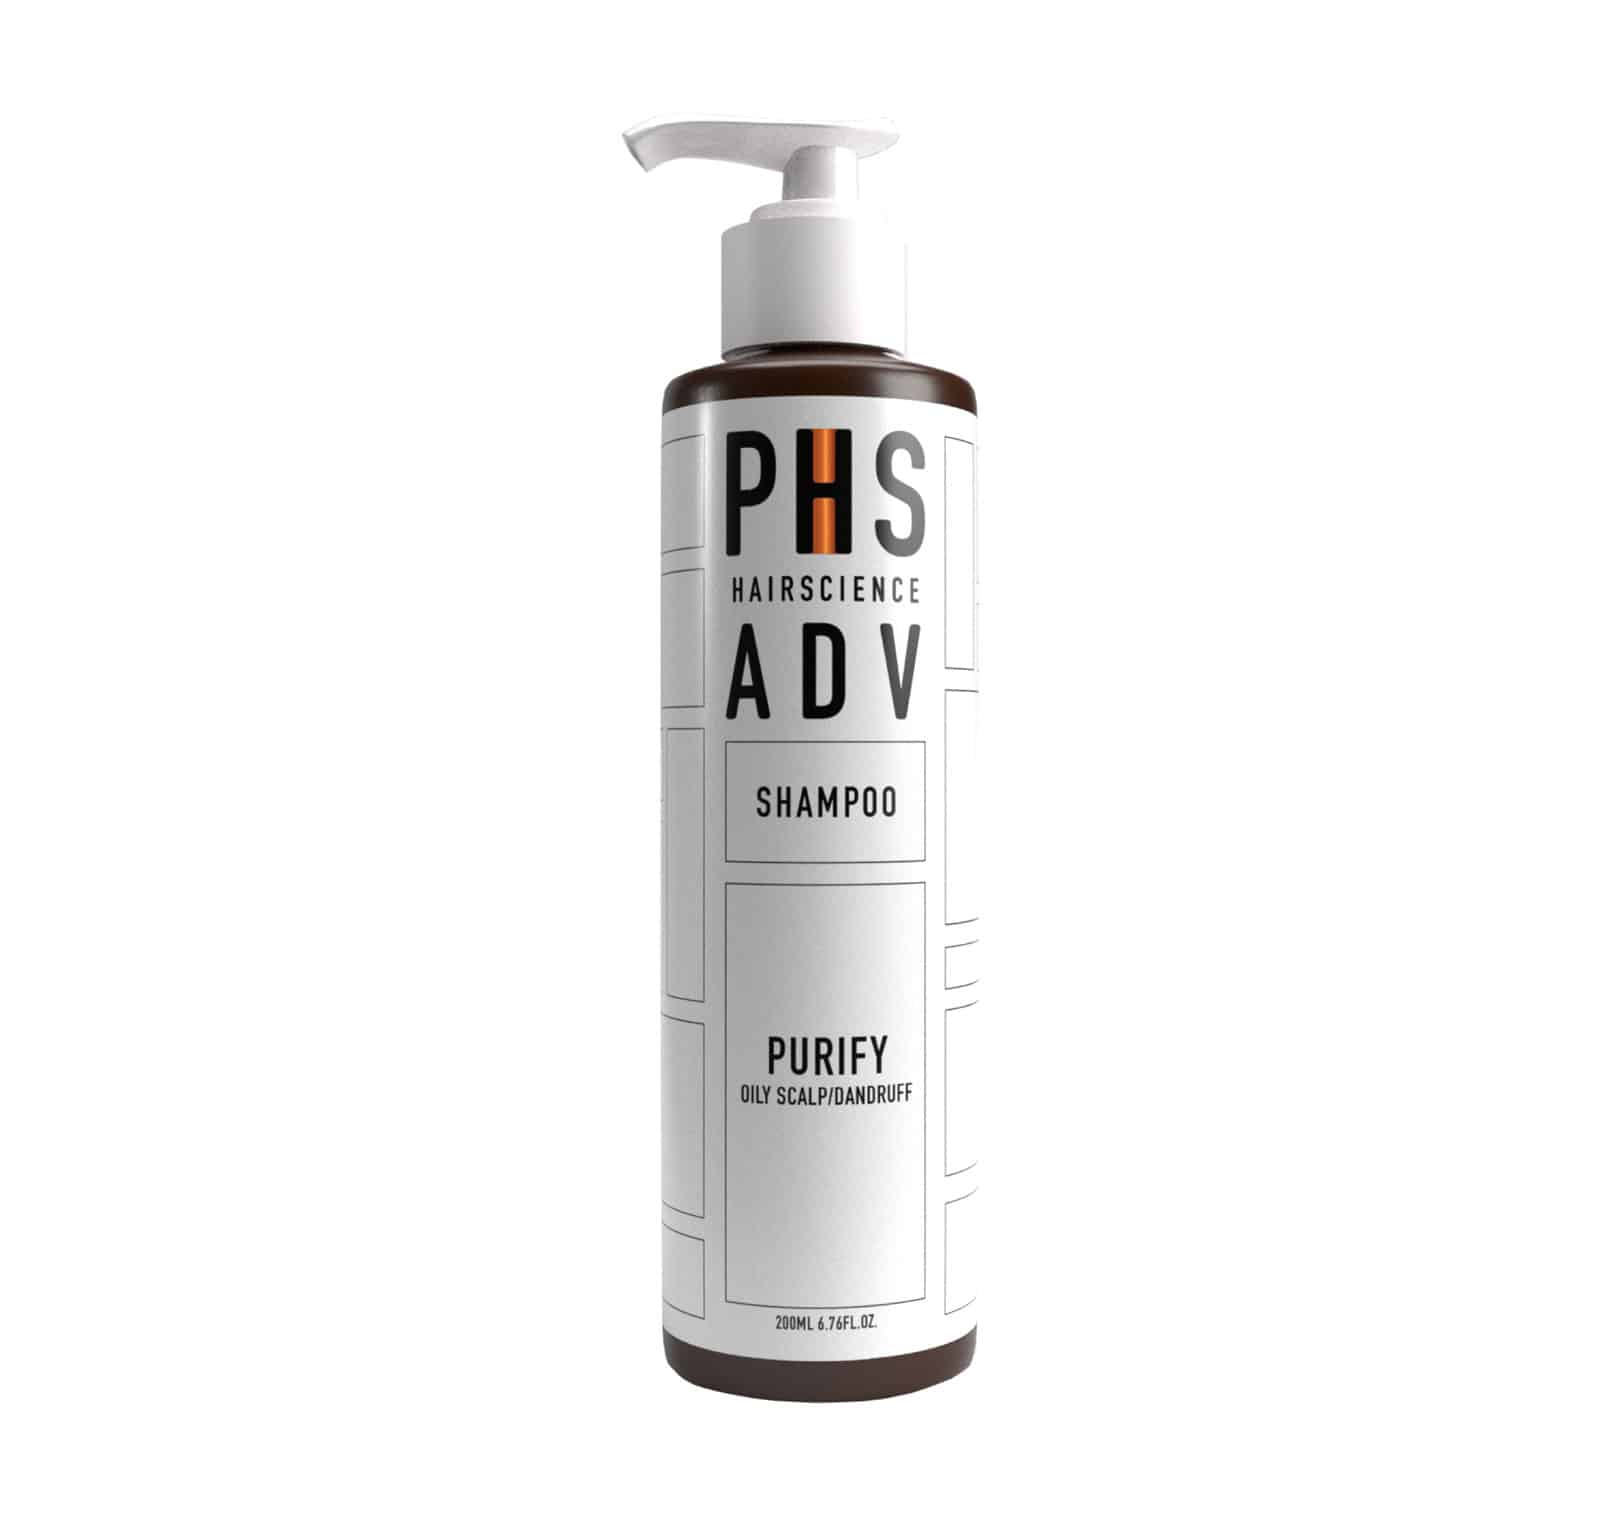 PHS HAIRSCIENCE ADV Purify Shampoo